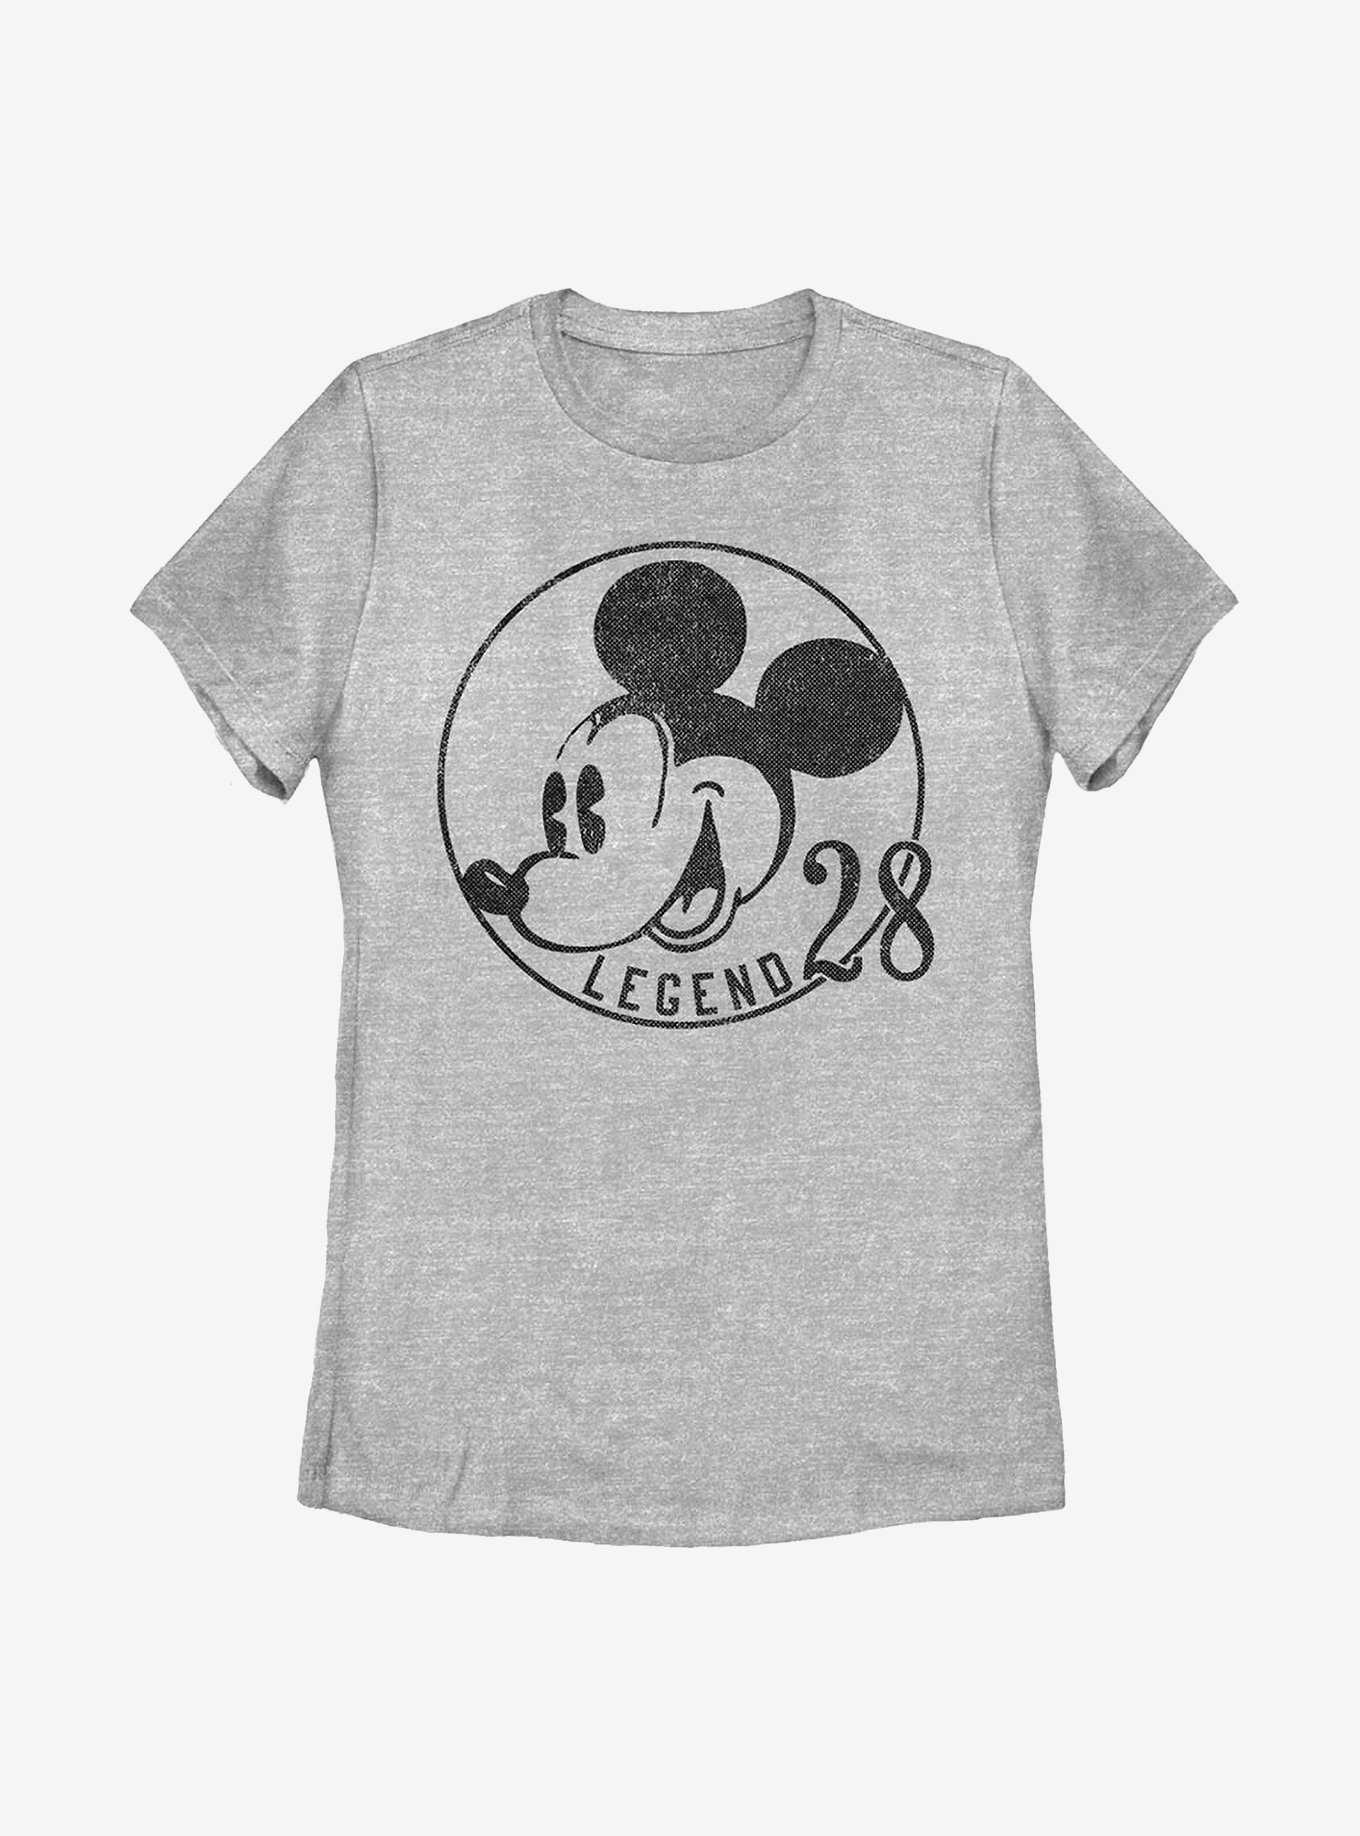 Disney Mickey Mouse 1928 Legend Womens T-Shirt, , hi-res